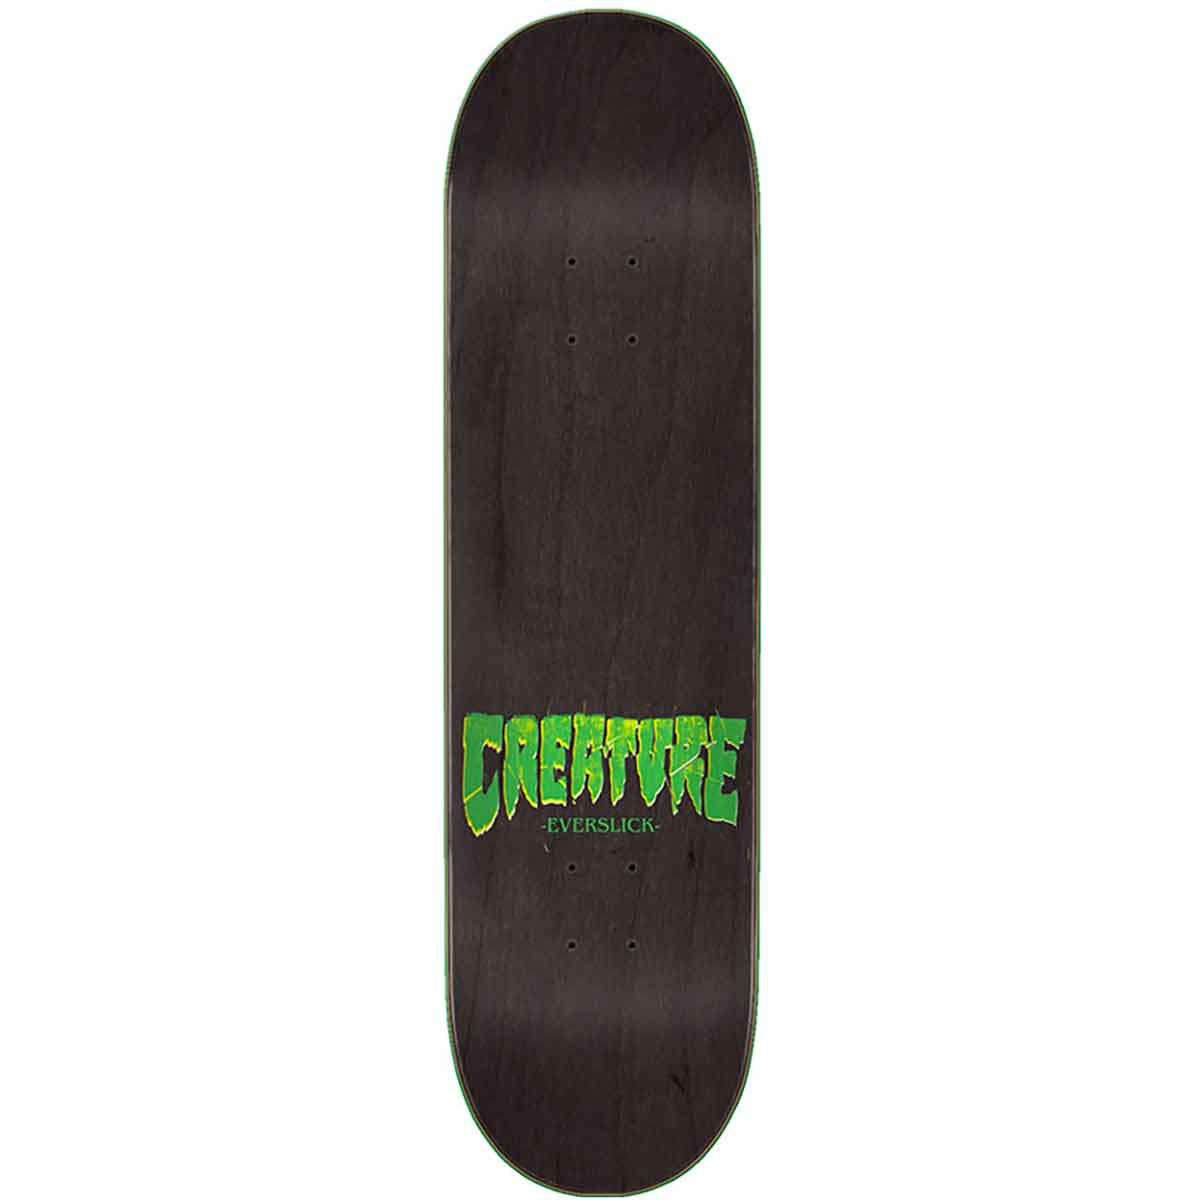 8.25 Creature Shatter MD Everslick Skateboard Deck